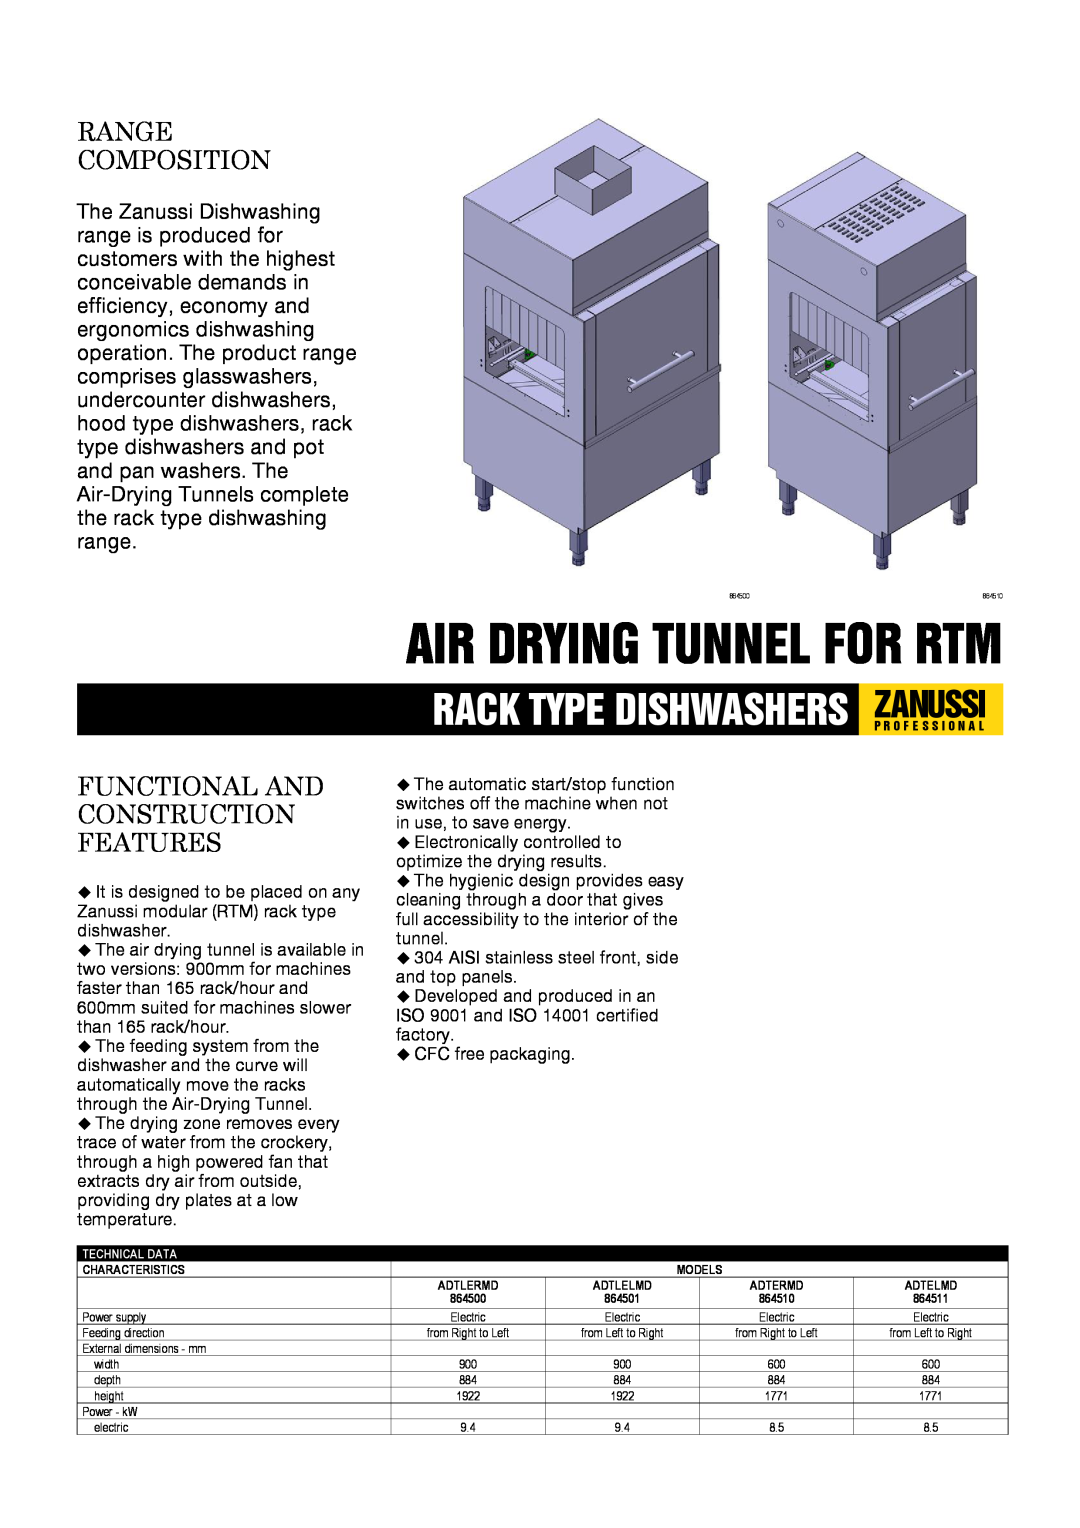 Zanussi 864500, ADTLELMD, ADTELMD dimensions Zanussi, Air Drying Tunnel For Rtm, Rack Type Dishwashers, Range Composition 